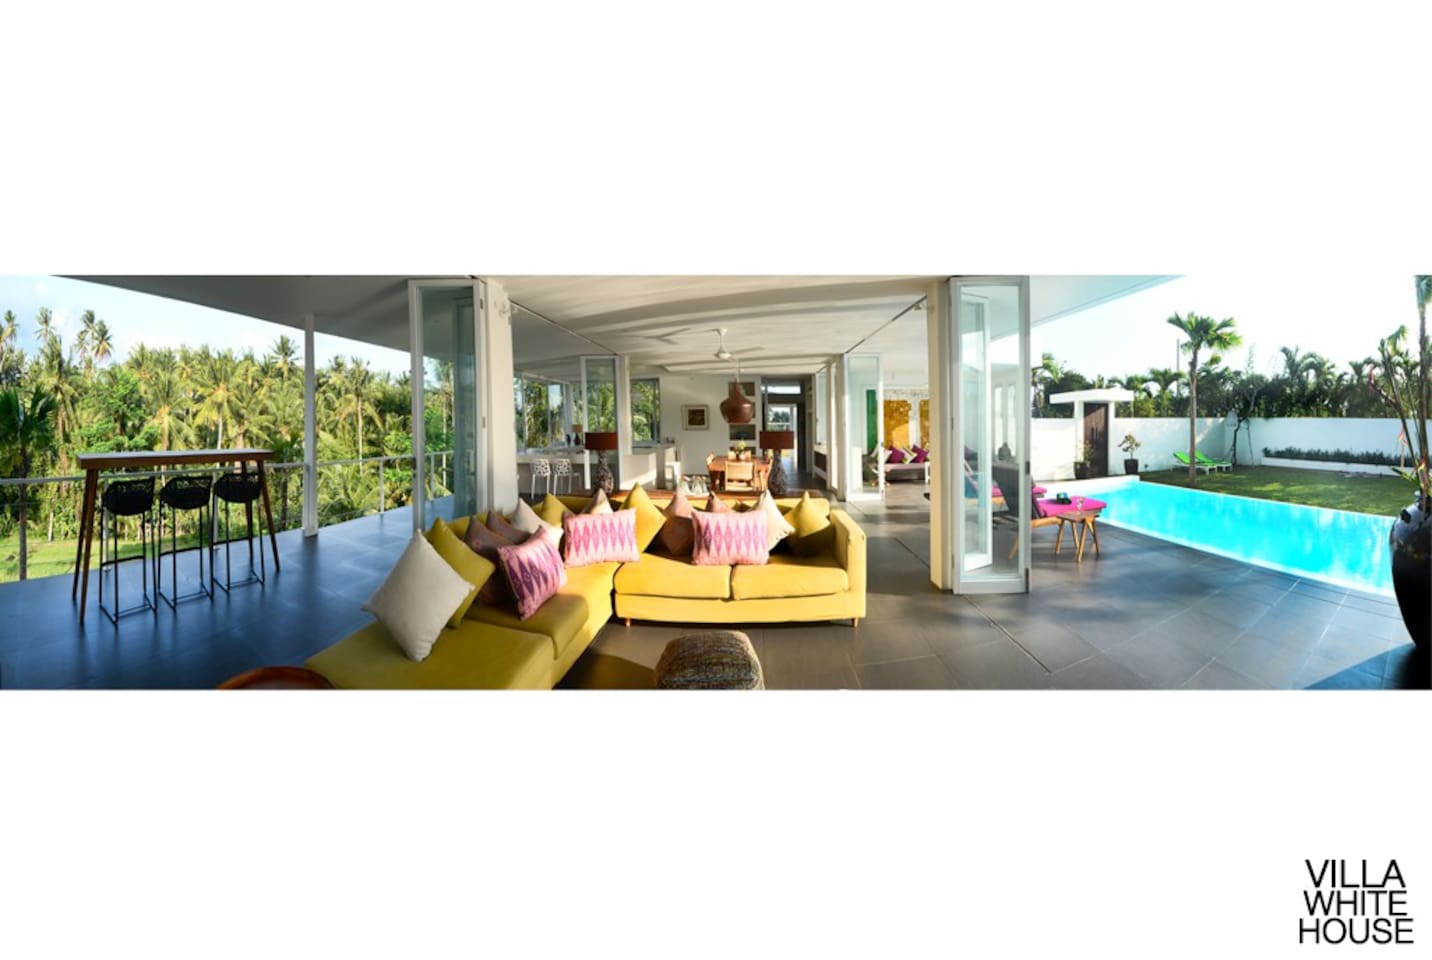 White House Ubud Luxury Villa 4BR Villas For Rent In Ubud Bali